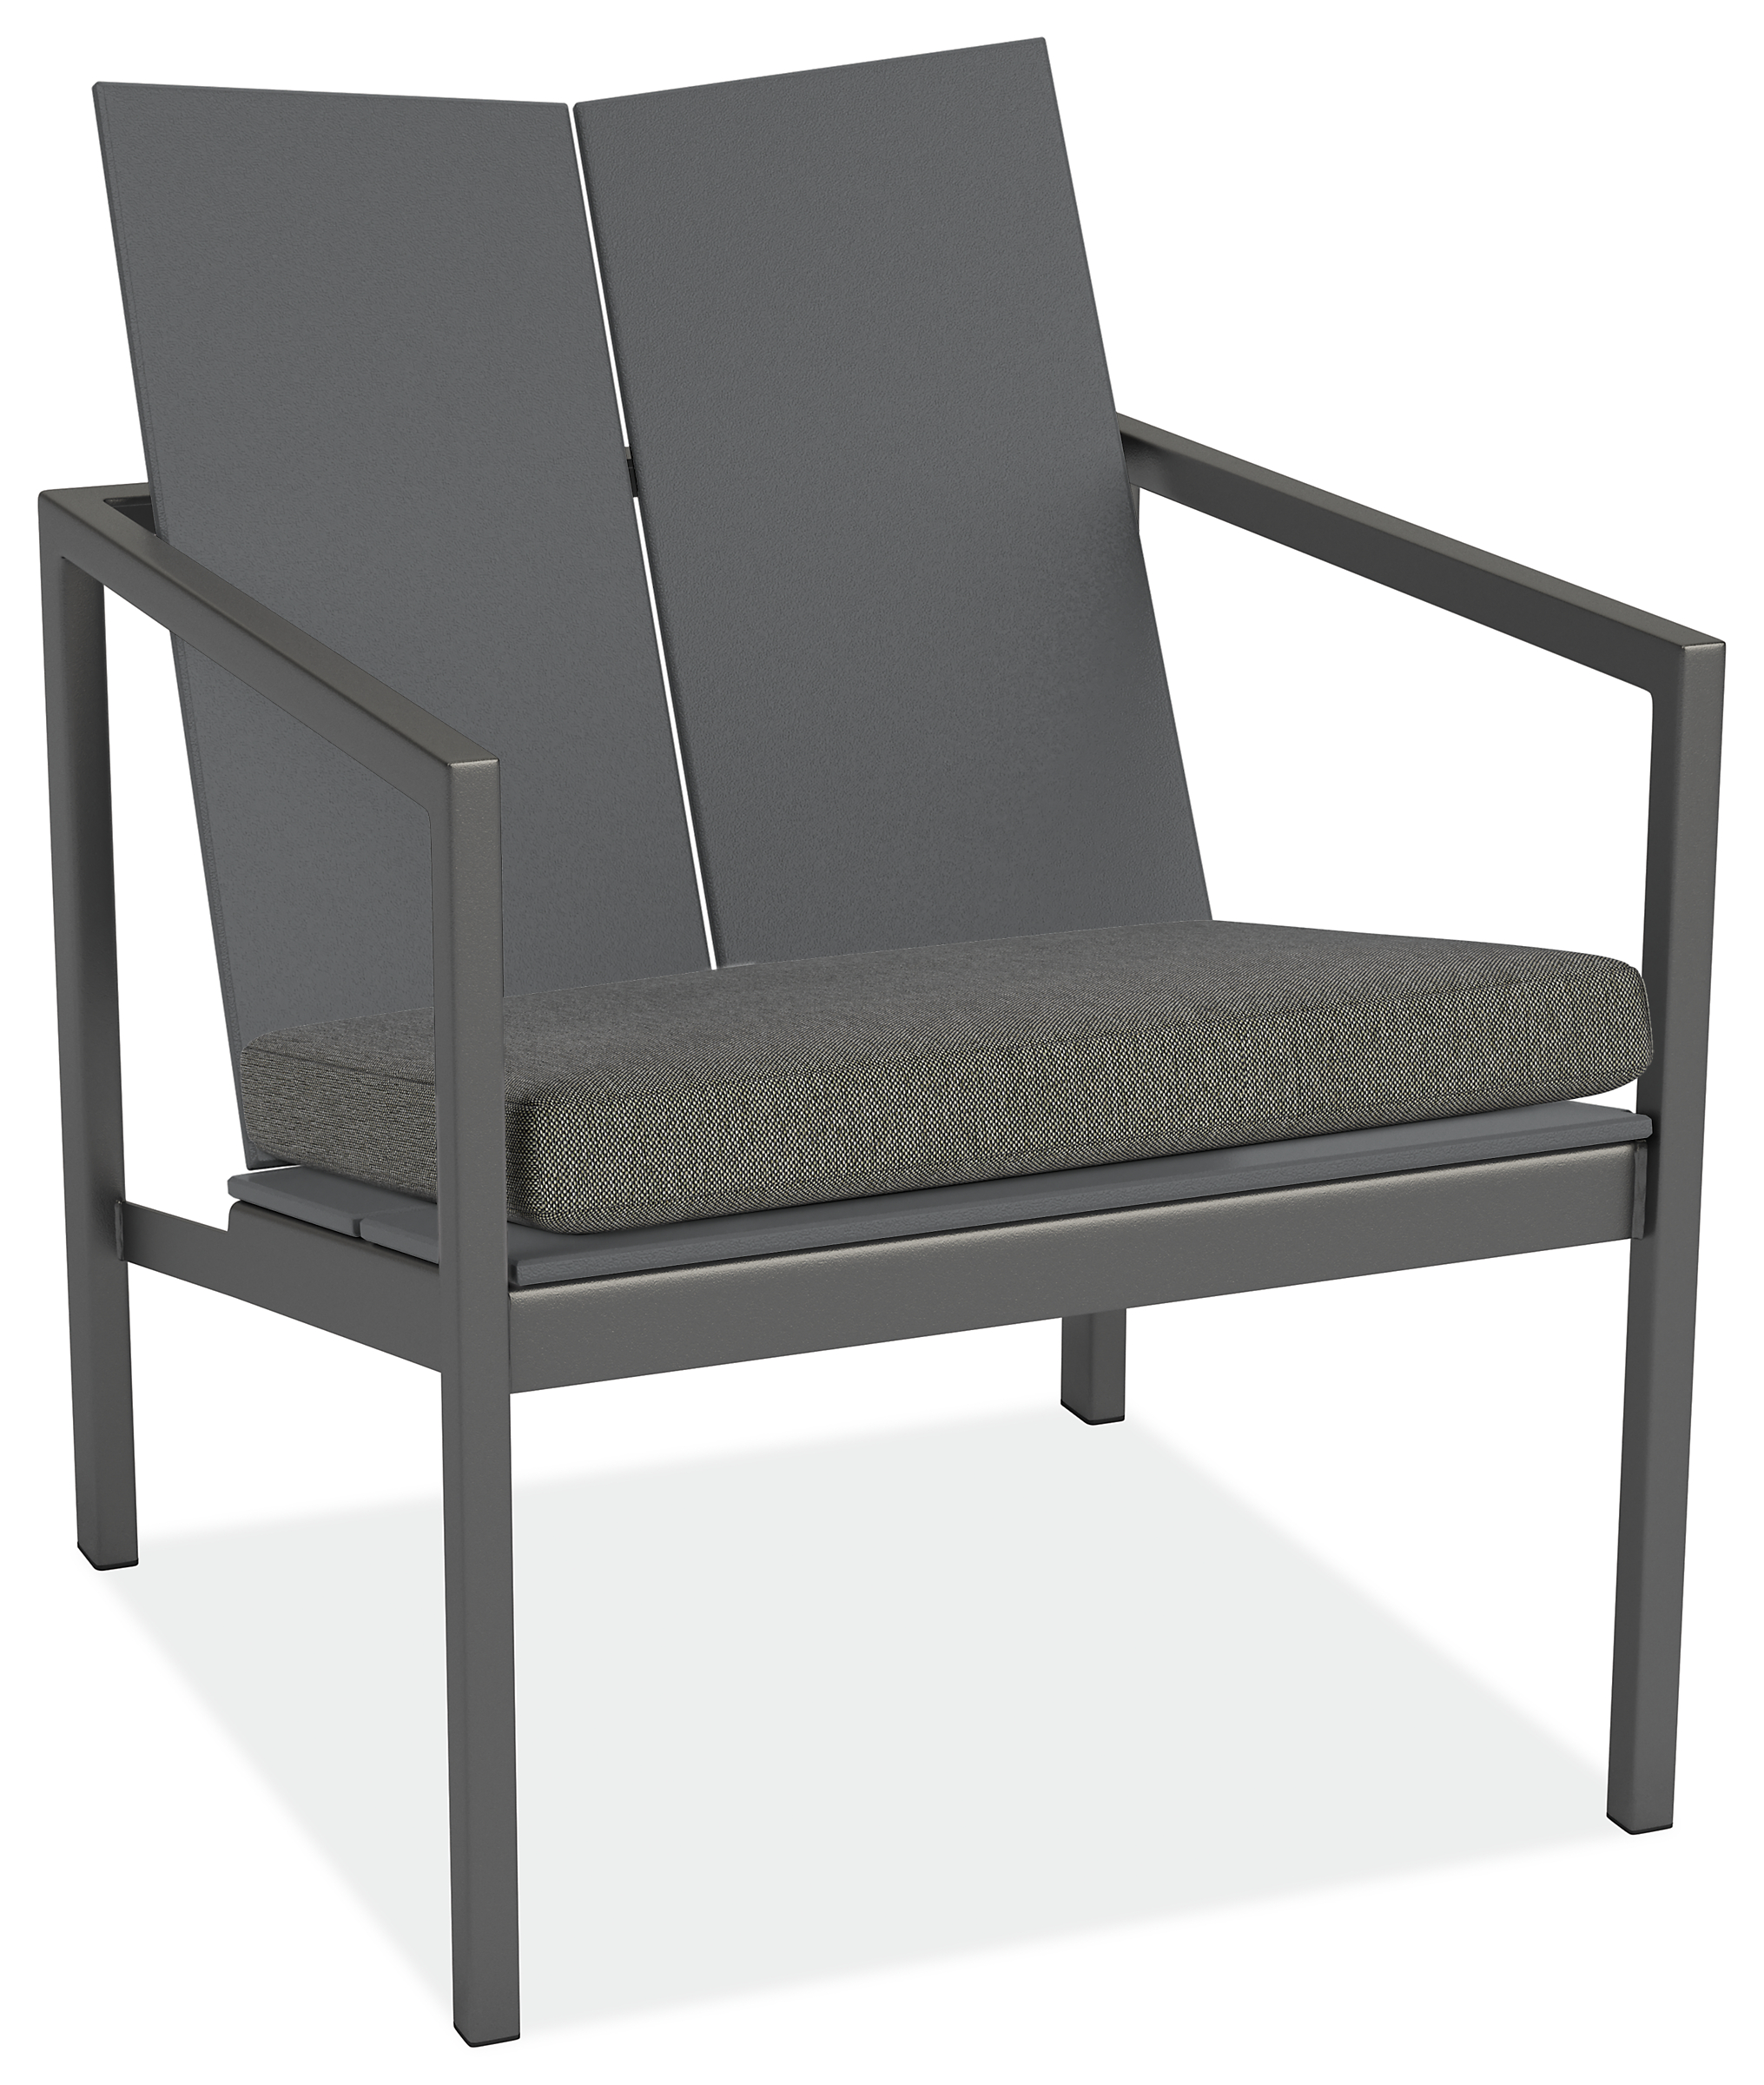 Mattix Lounge Chair